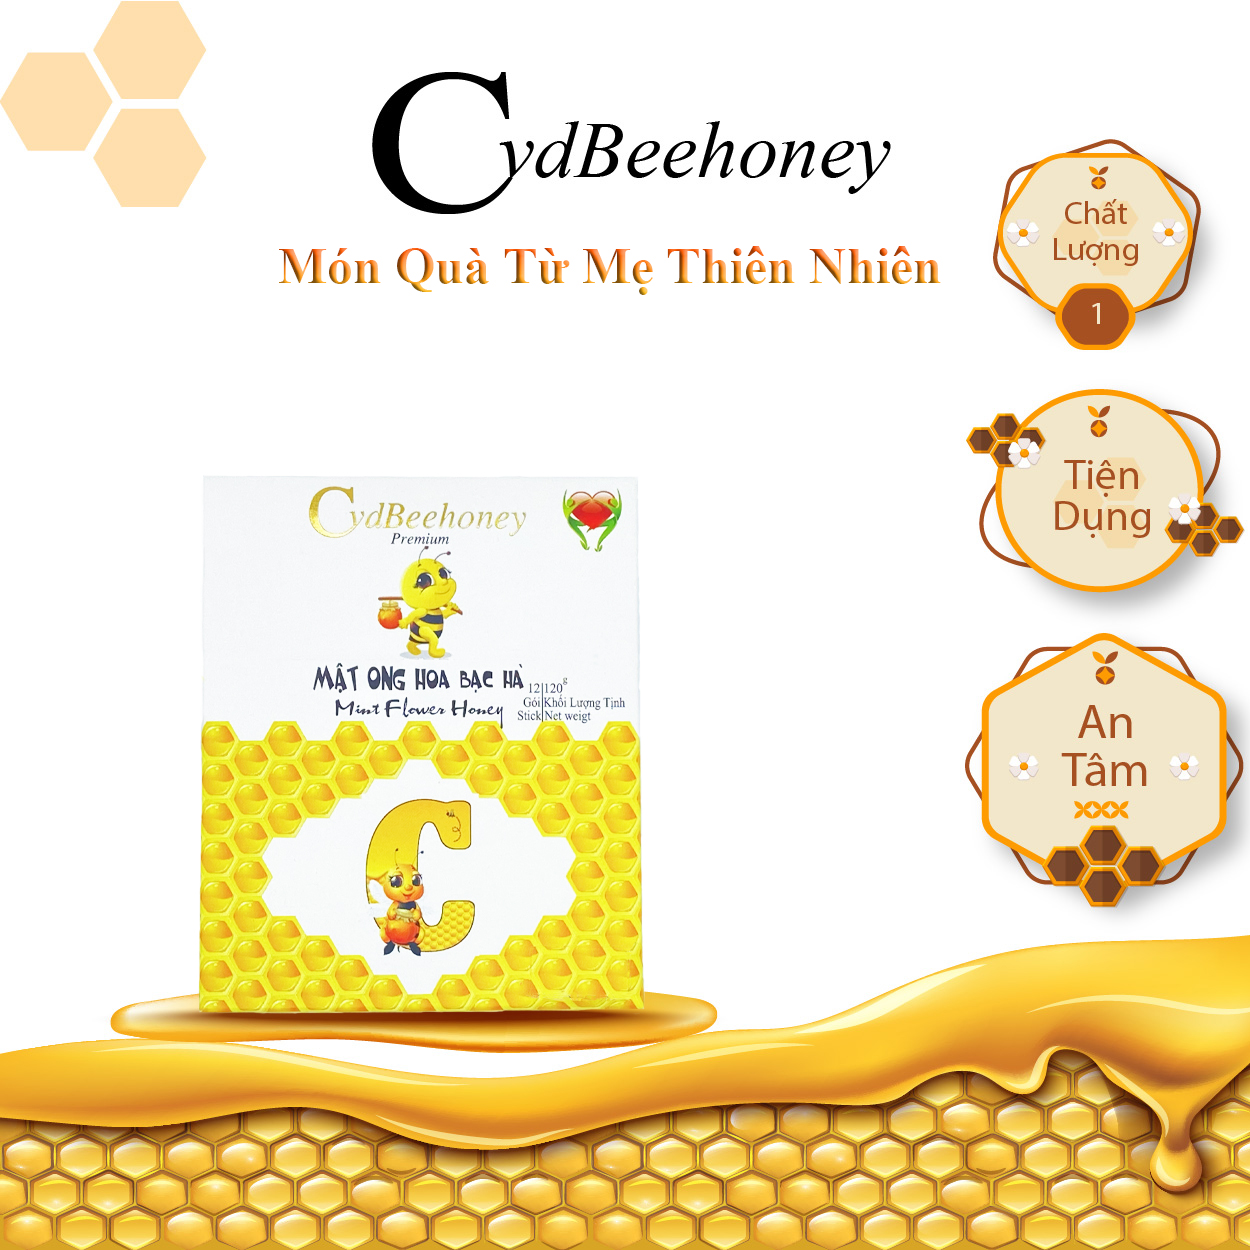 Mật Ong Bạc Hà 120g Cvdbeehoney - Mint Flower Honey 120g Cvdbeehoney